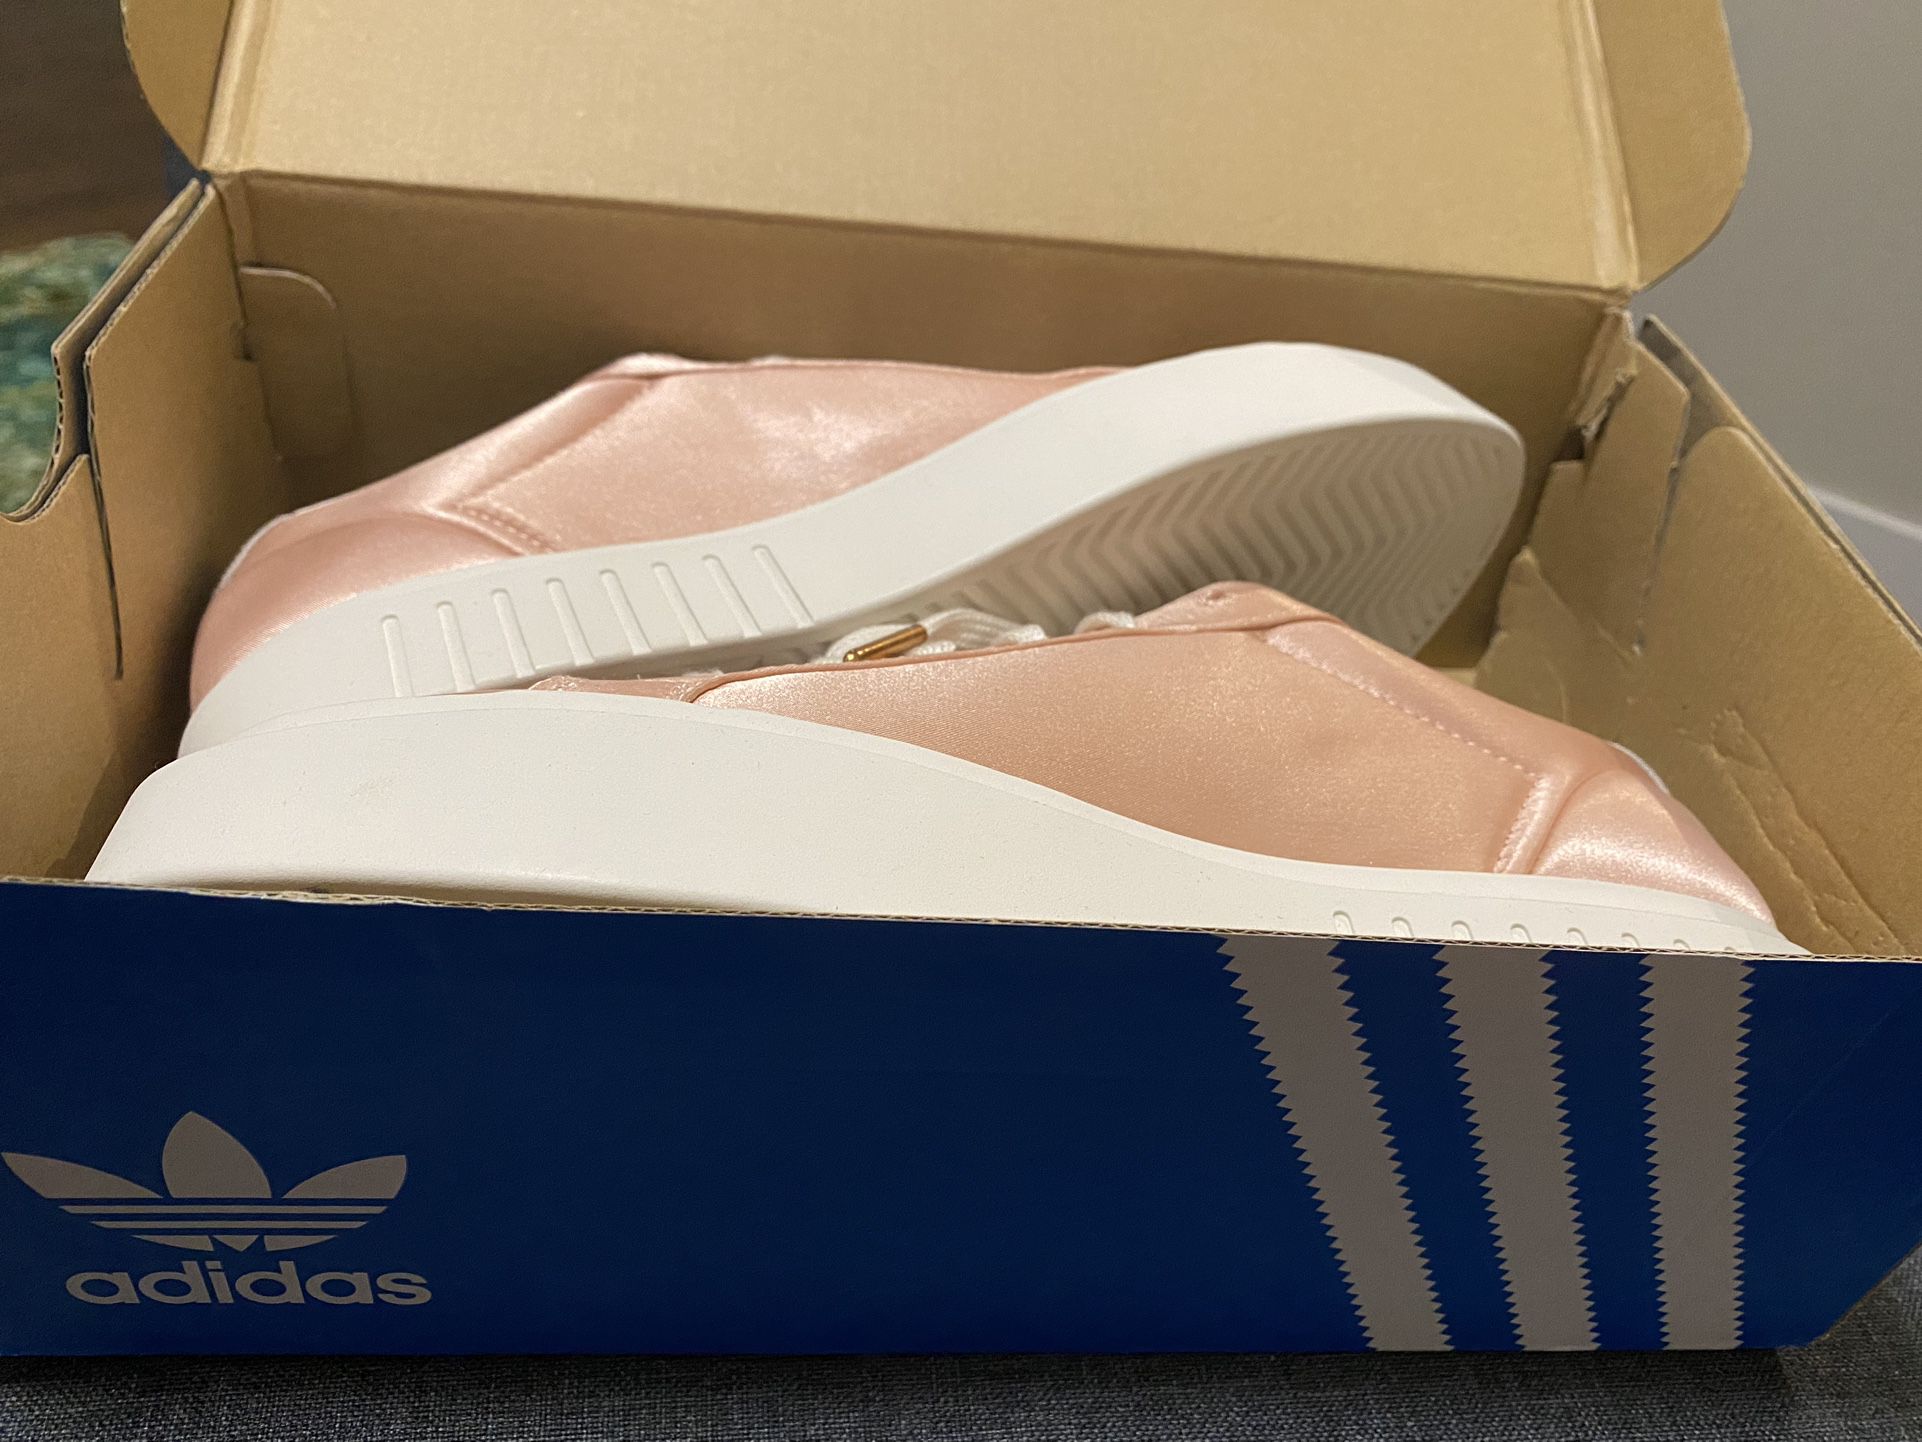 Adidas Sleek Super Vapour Pink Satin Platform Heel Sneakers 